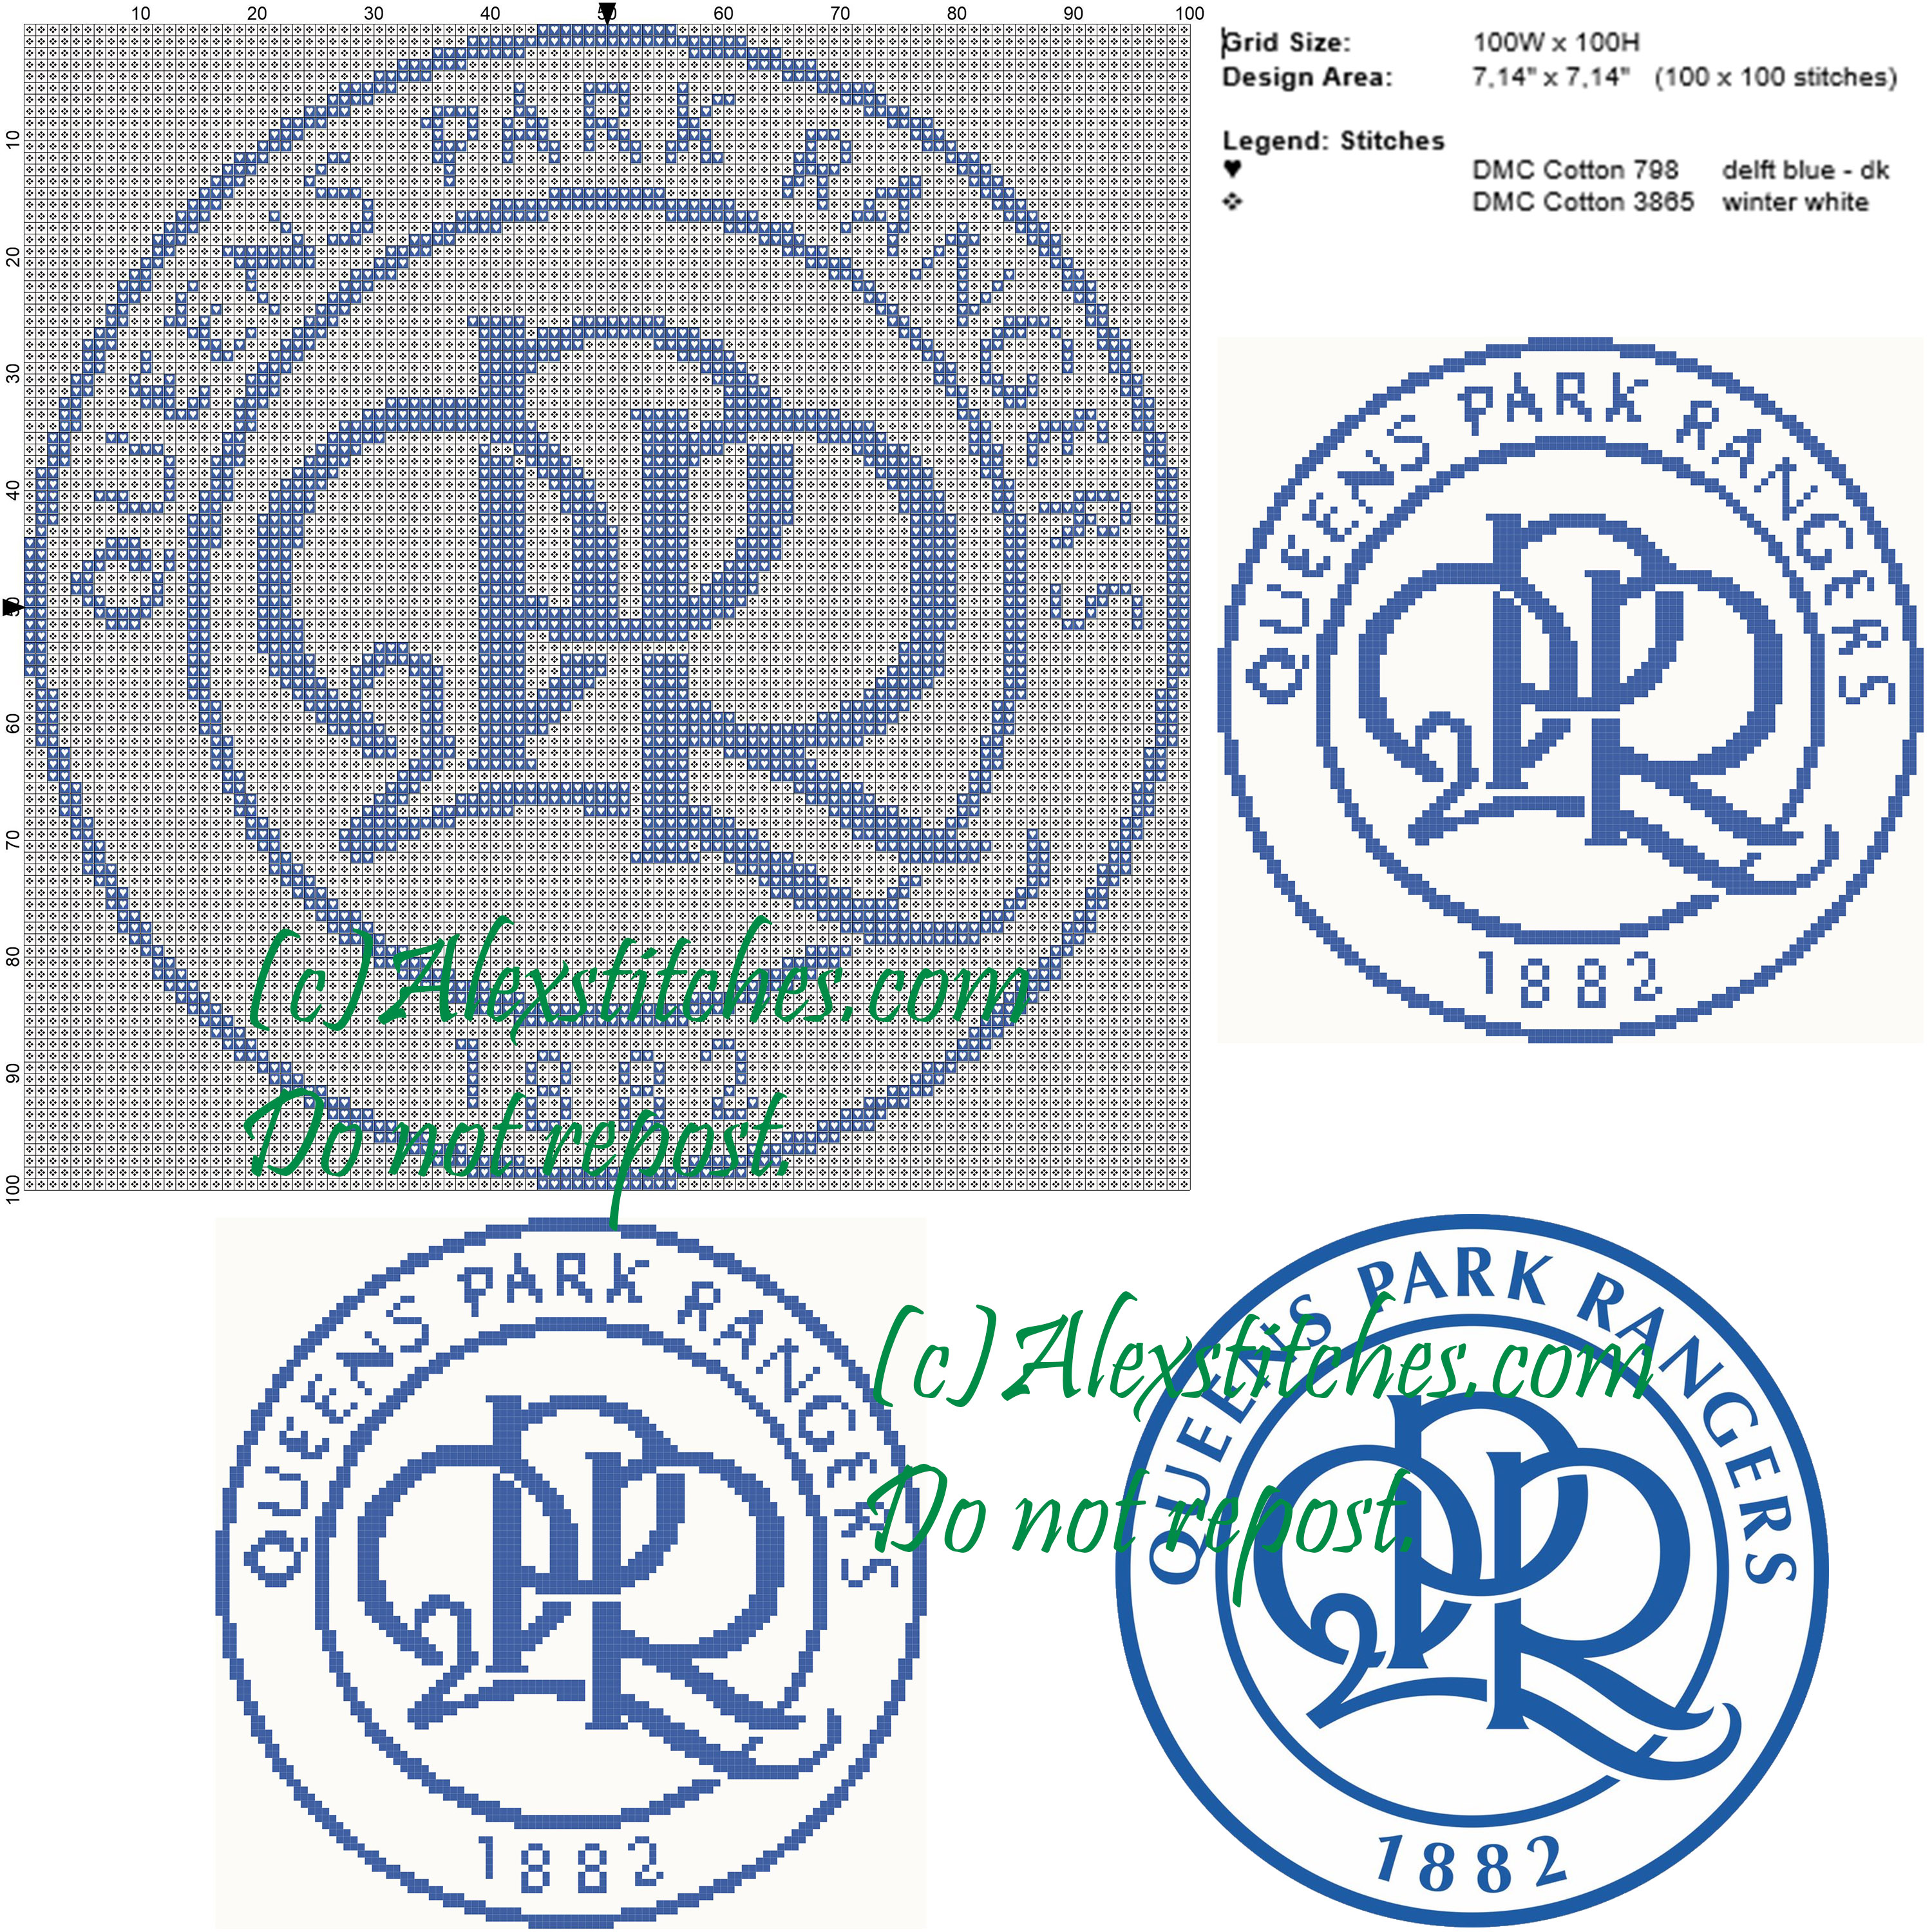 Queen Park Ranger logo association football club 100x100 2 colors